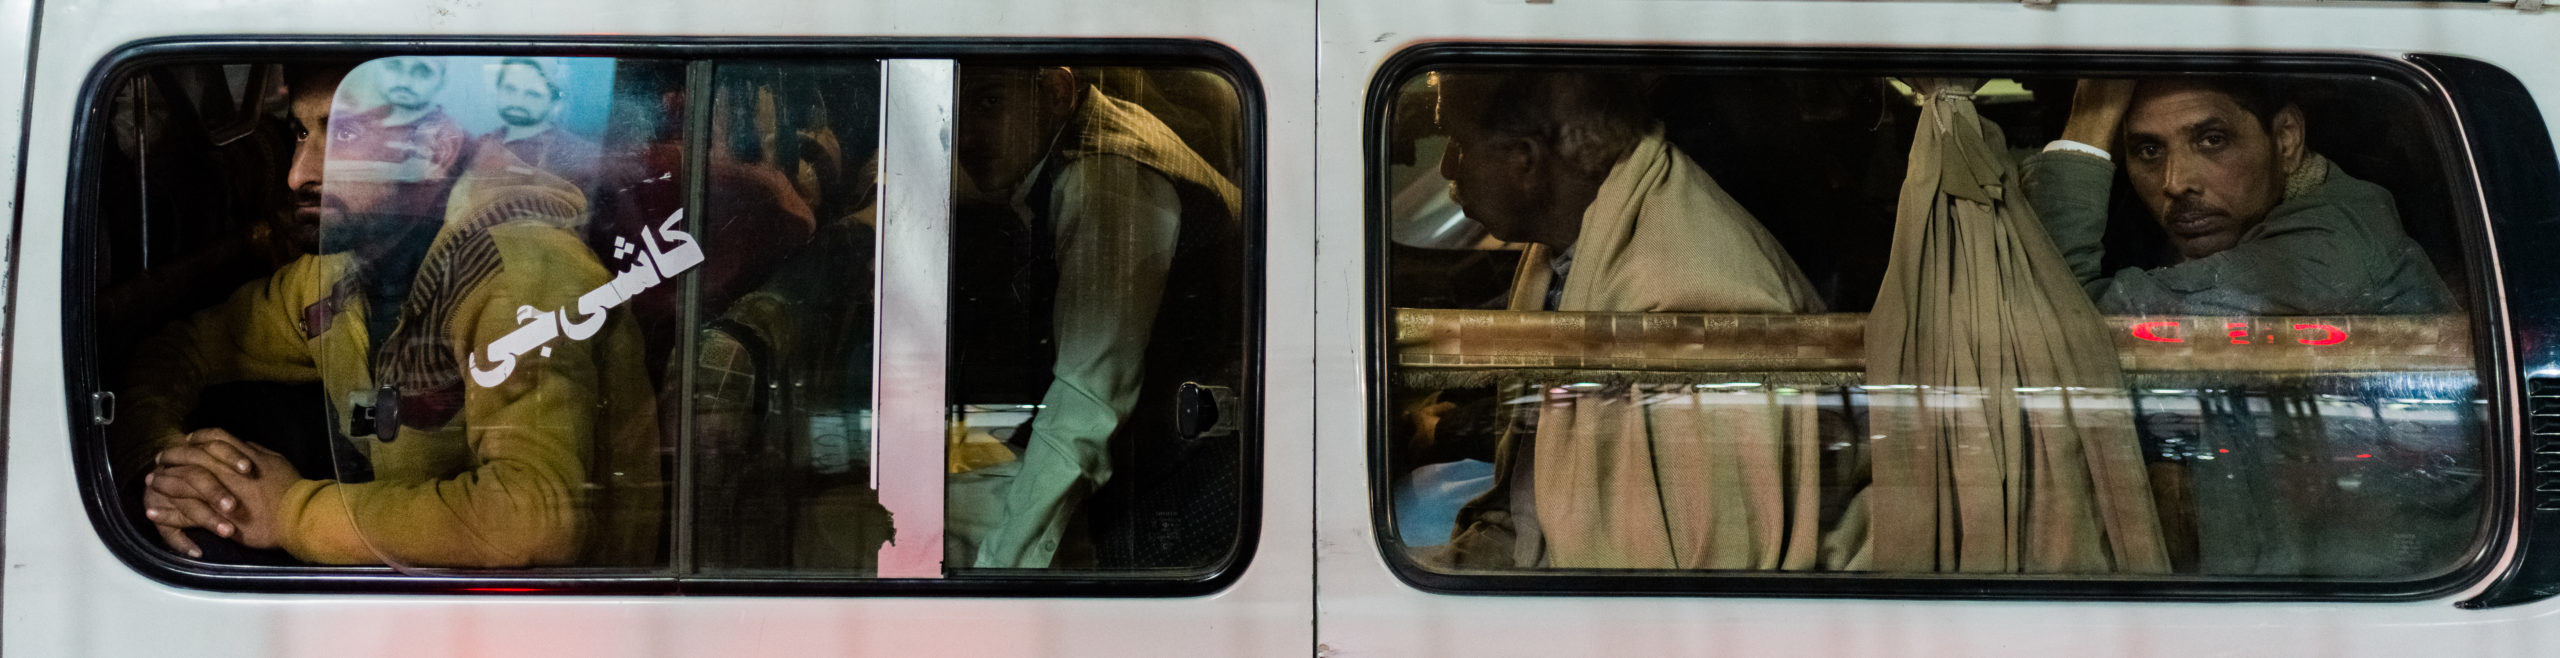 People crammed in a commuter white van peer through the window